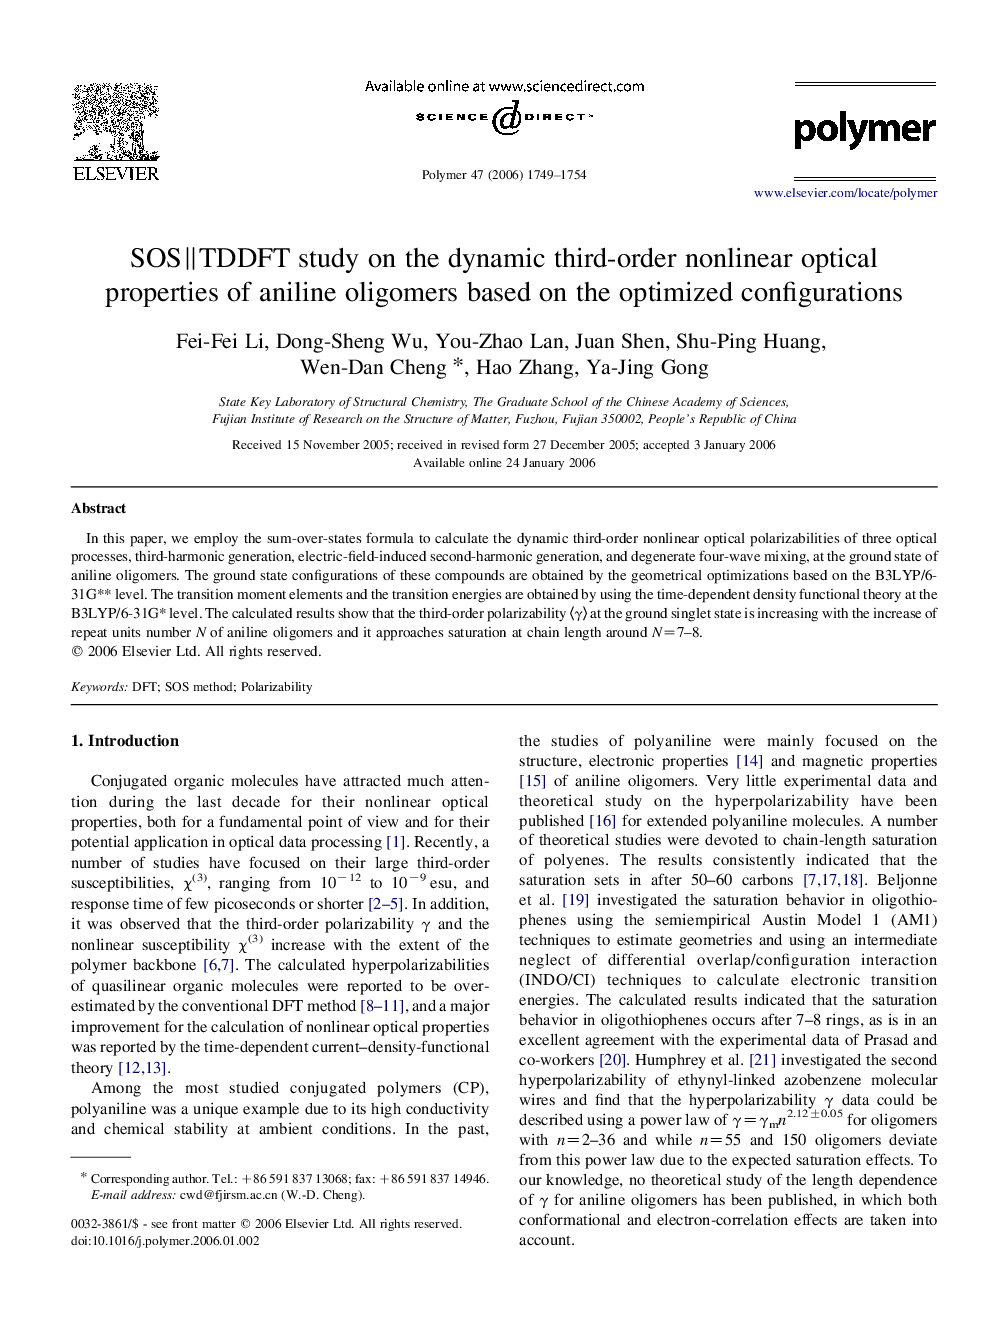 SOSâ¥TDDFT study on the dynamic third-order nonlinear optical properties of aniline oligomers based on the optimized configurations